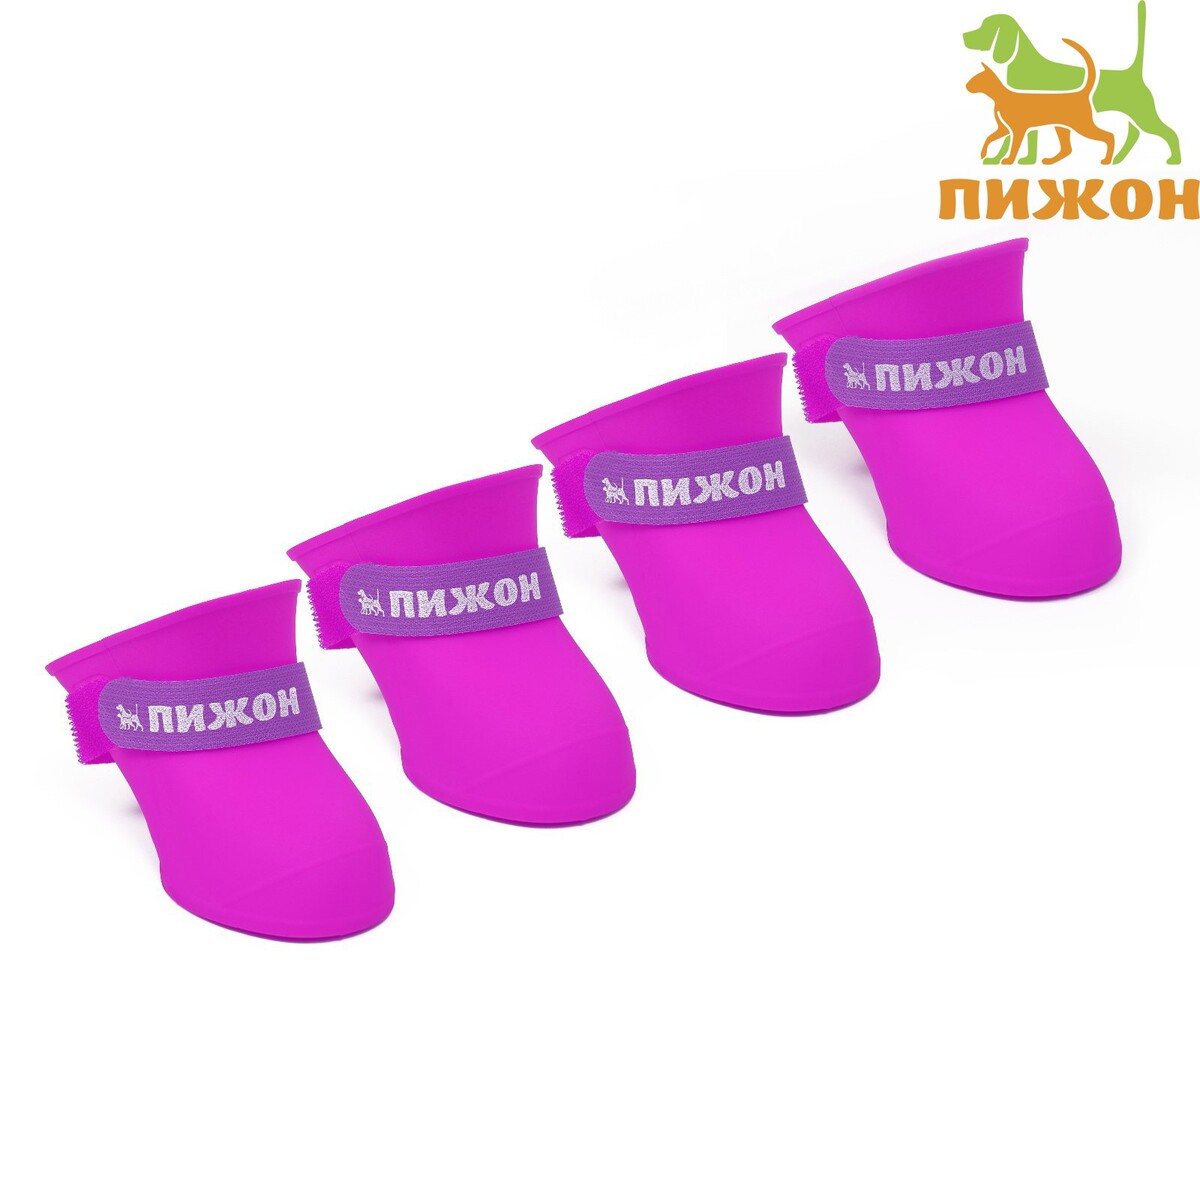 фото Сапоги резиновые пижон, набор 4 шт., р-р s (подошва 4 х 3 см), фиолетовые